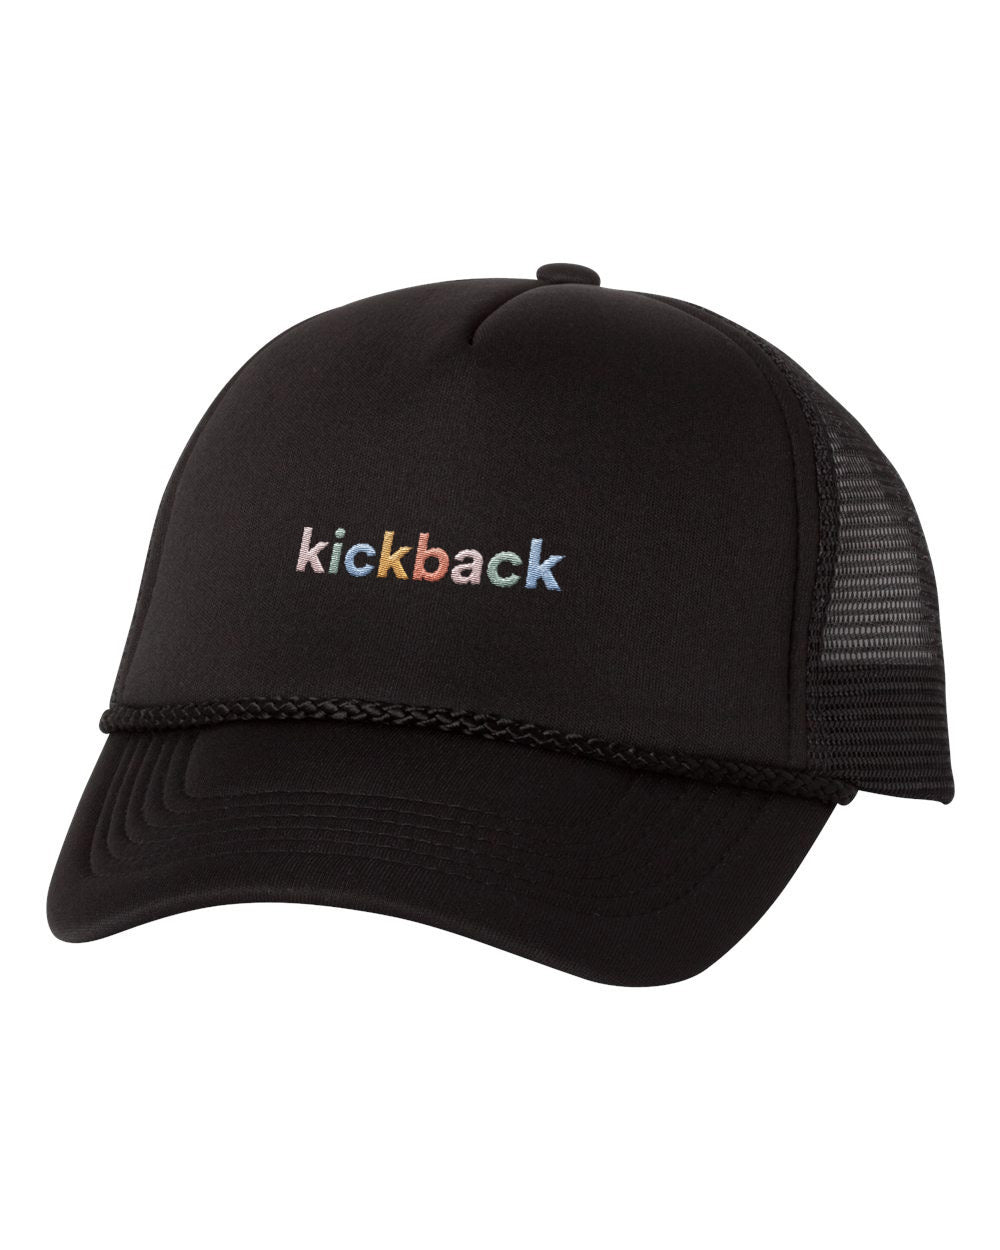 Kickback Hat - Black